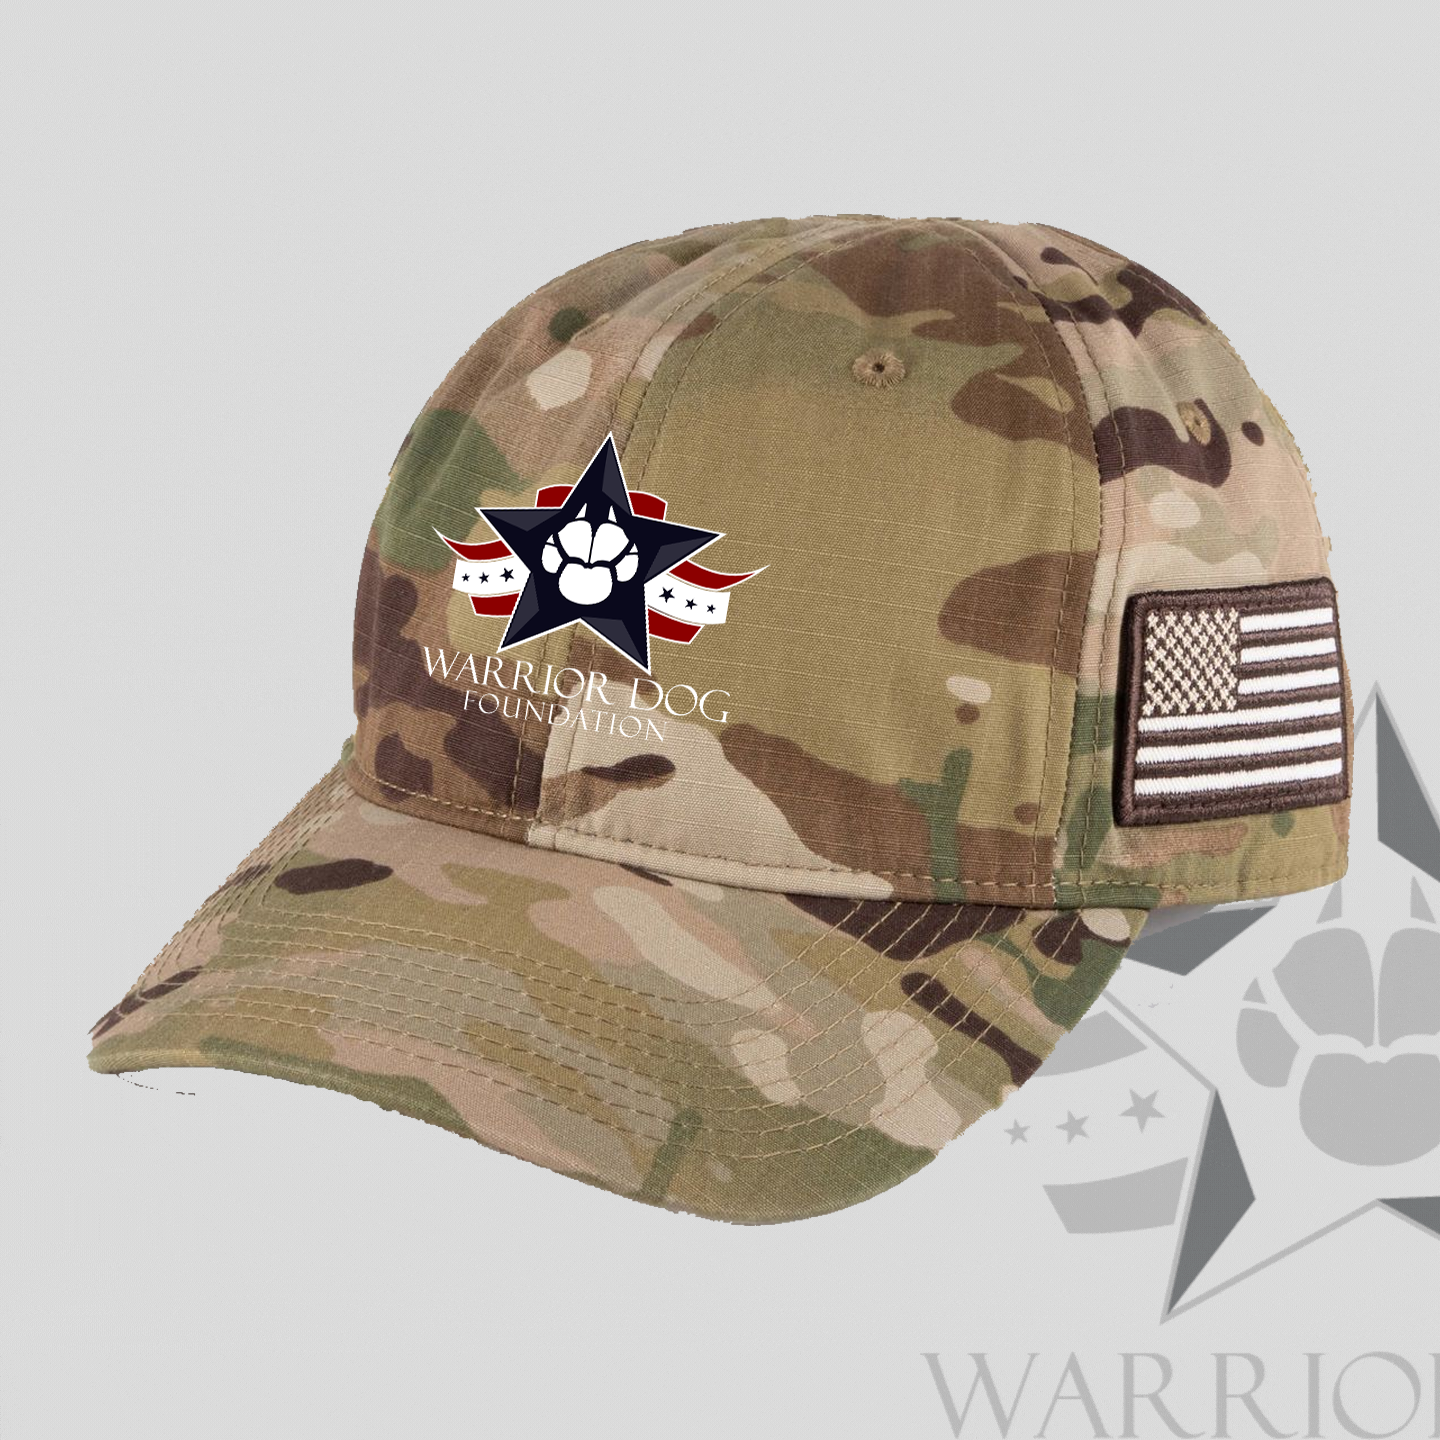 Warrior Dog Foundation Tactical Multicam Cap with Flag